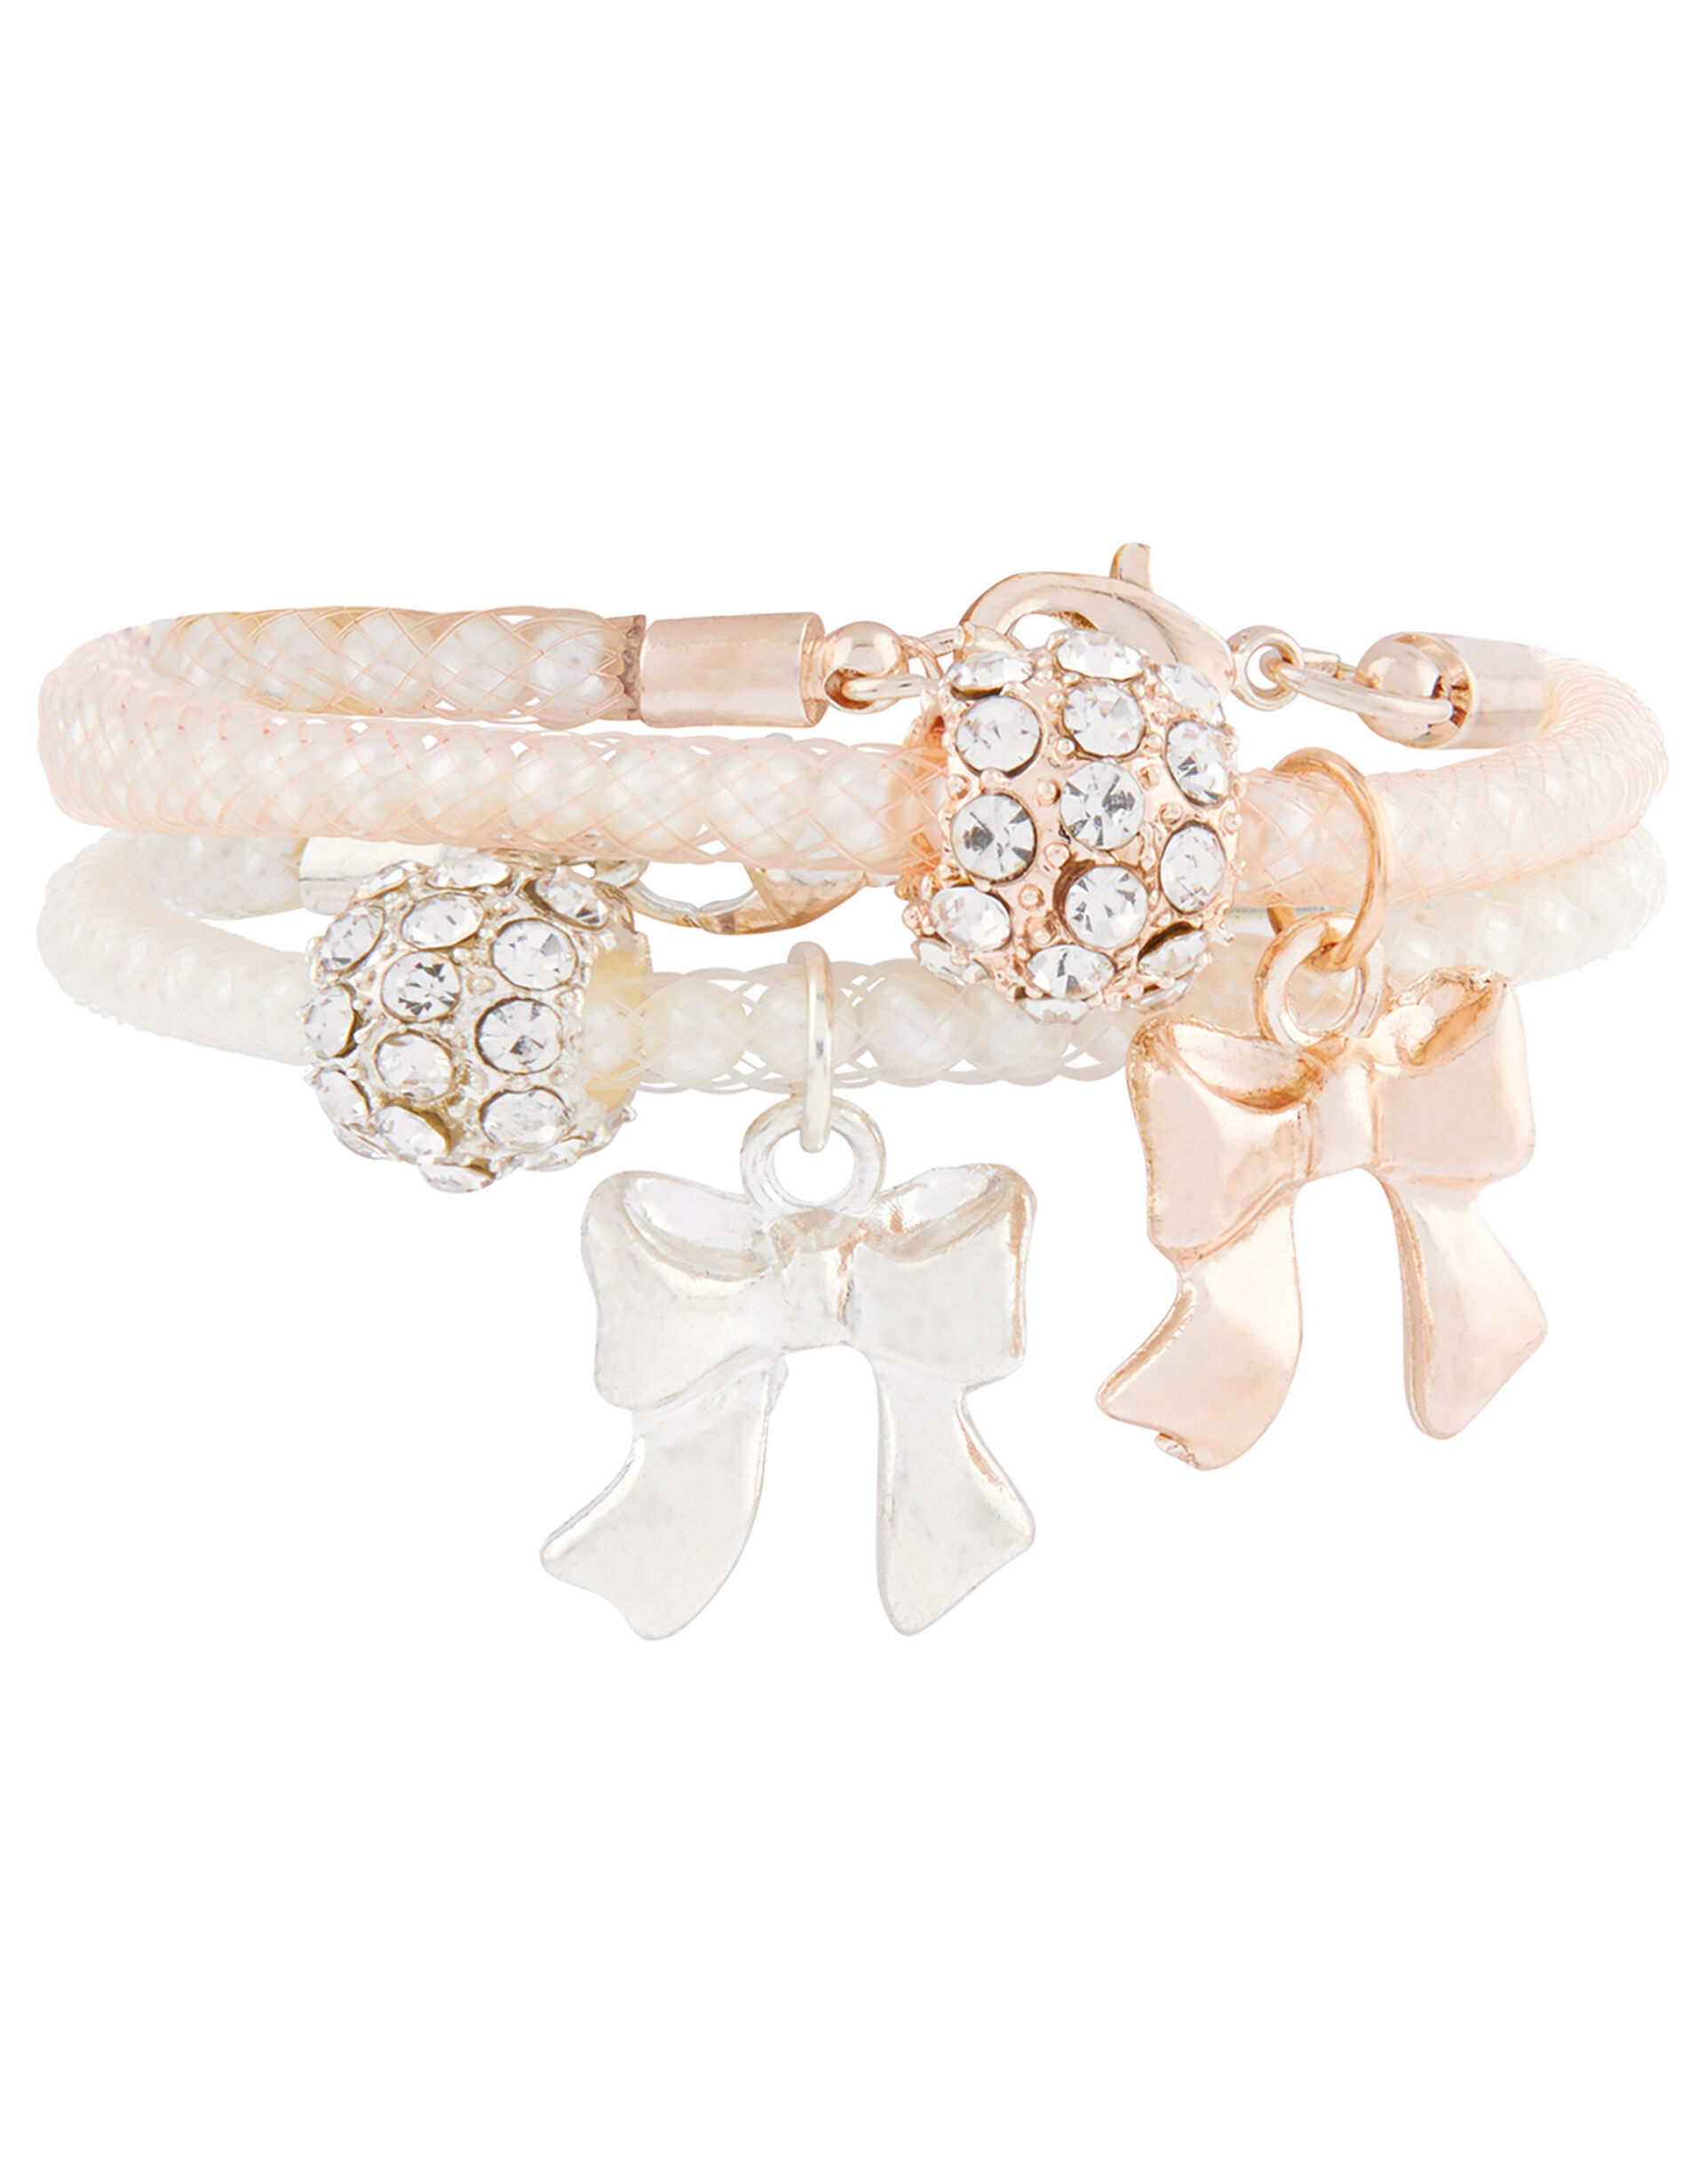 Bow Charm Pearl-Encased Bracelets, , large